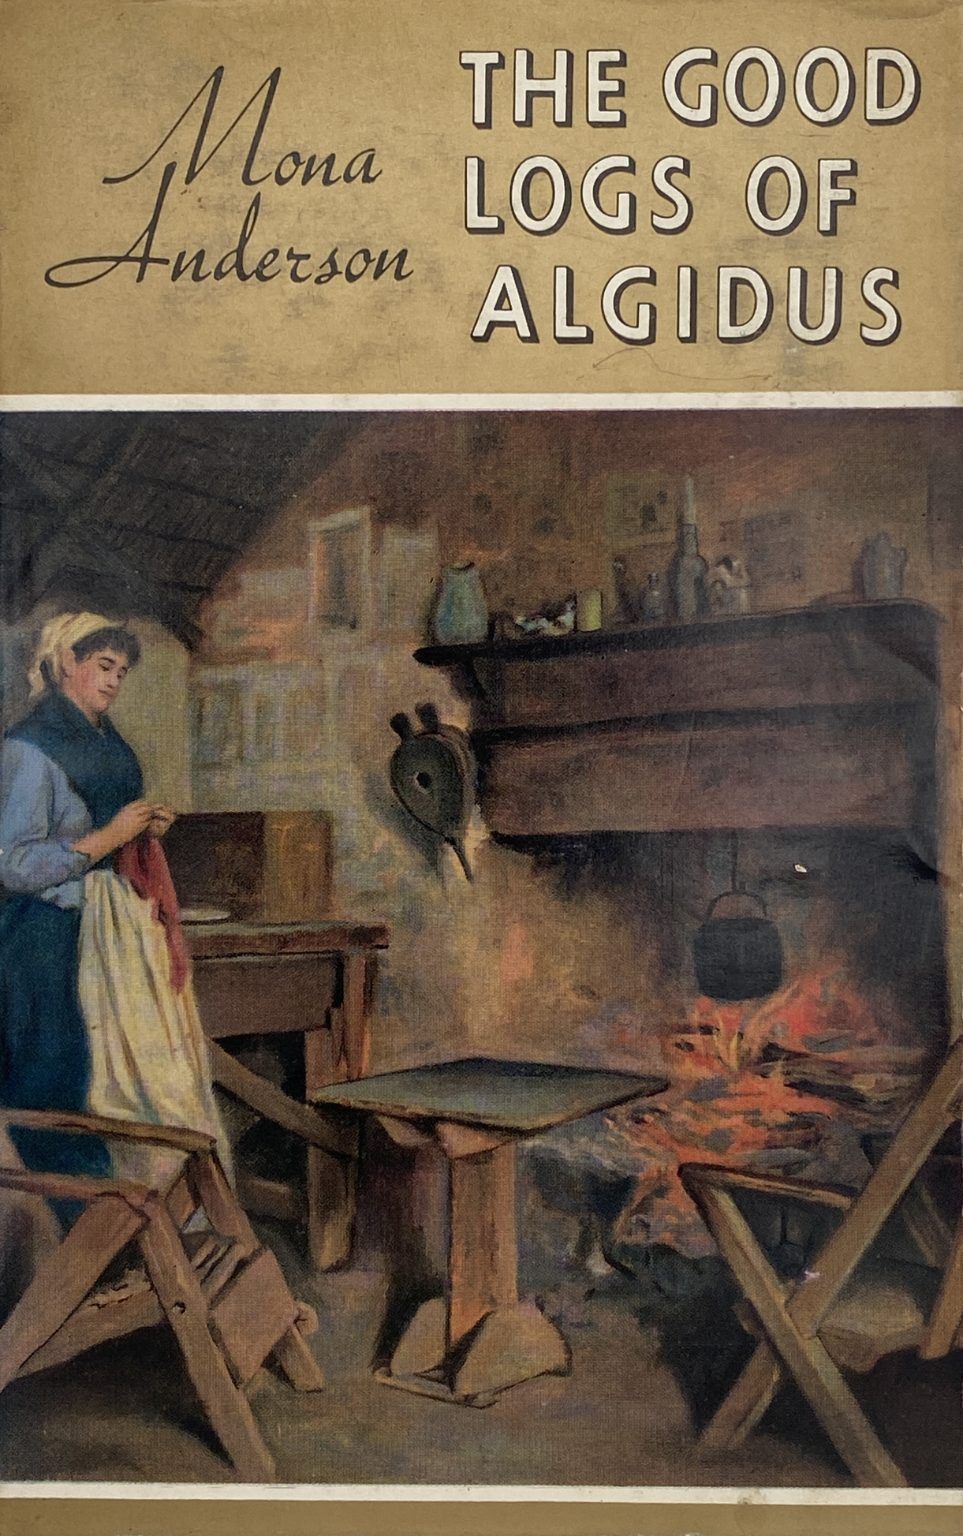 THE GOOD LOGS OF ALGIDUS